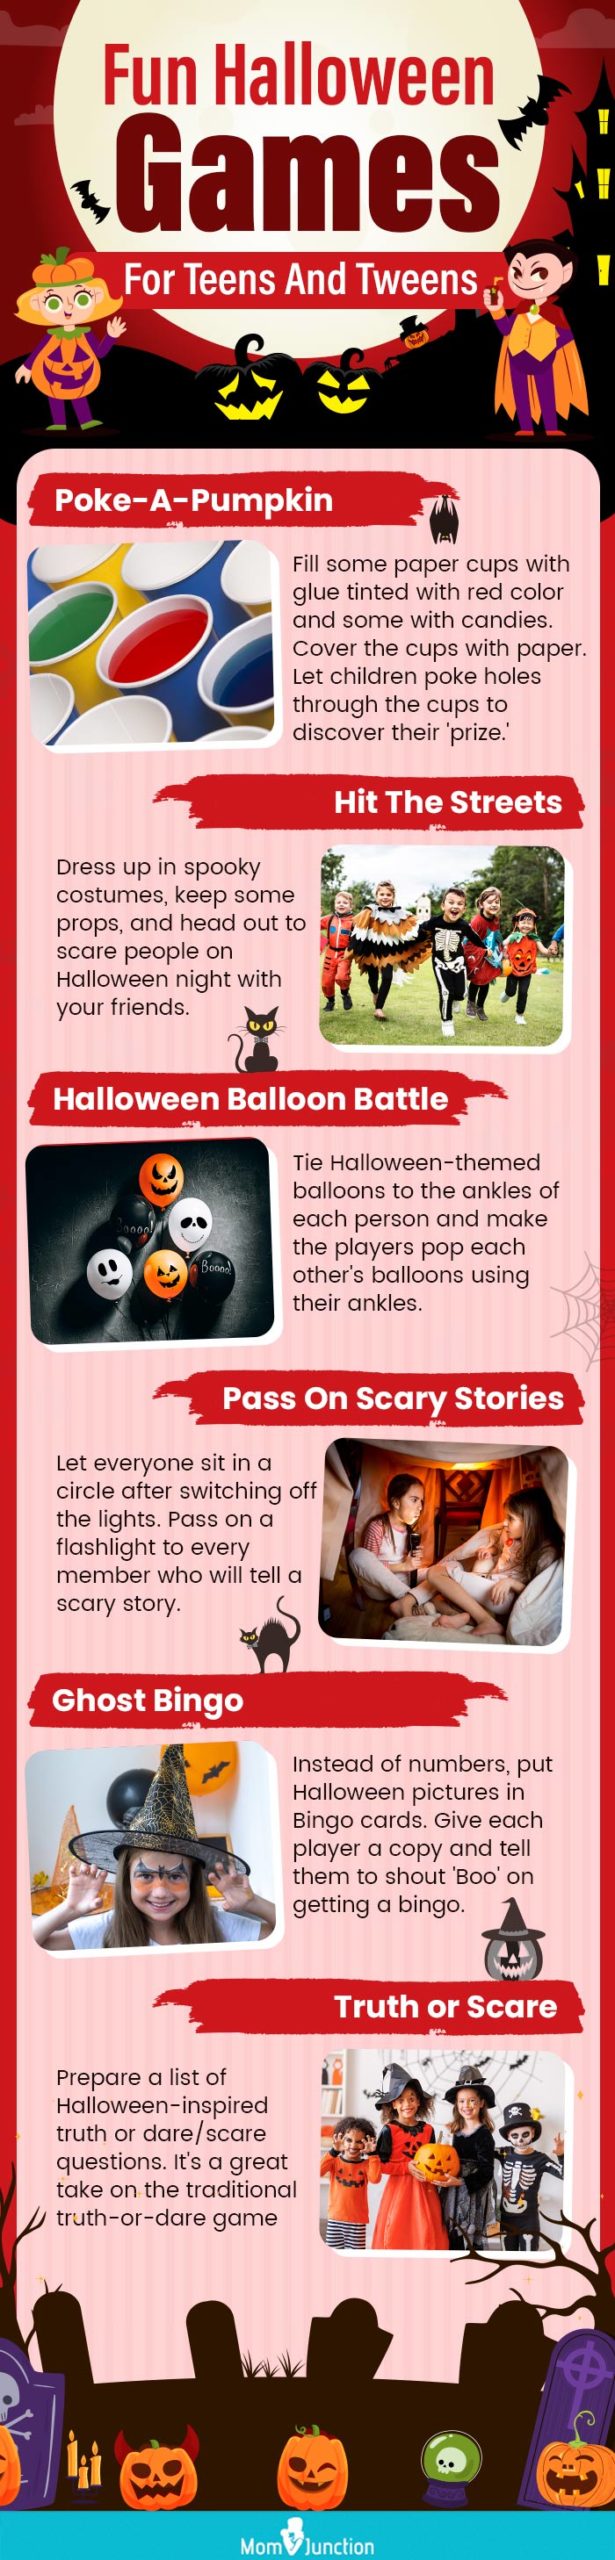 fun halloween games for teens and tweens (infographic)